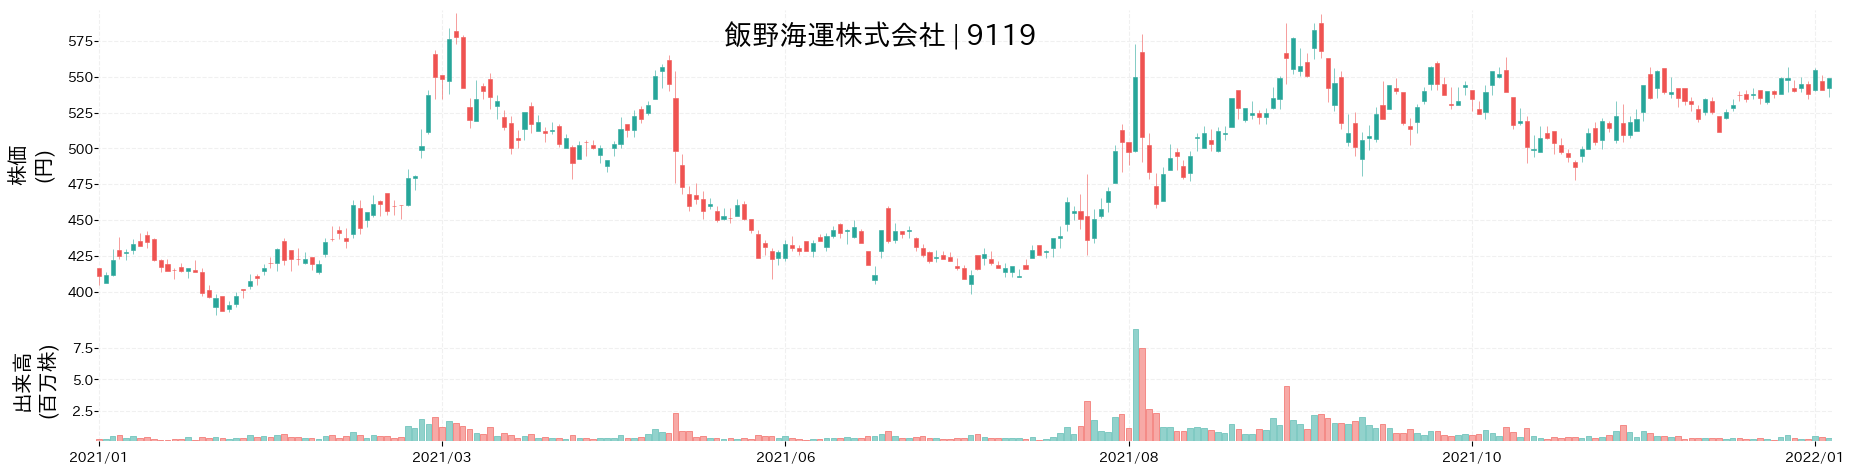 飯野海運の株価推移(2021)